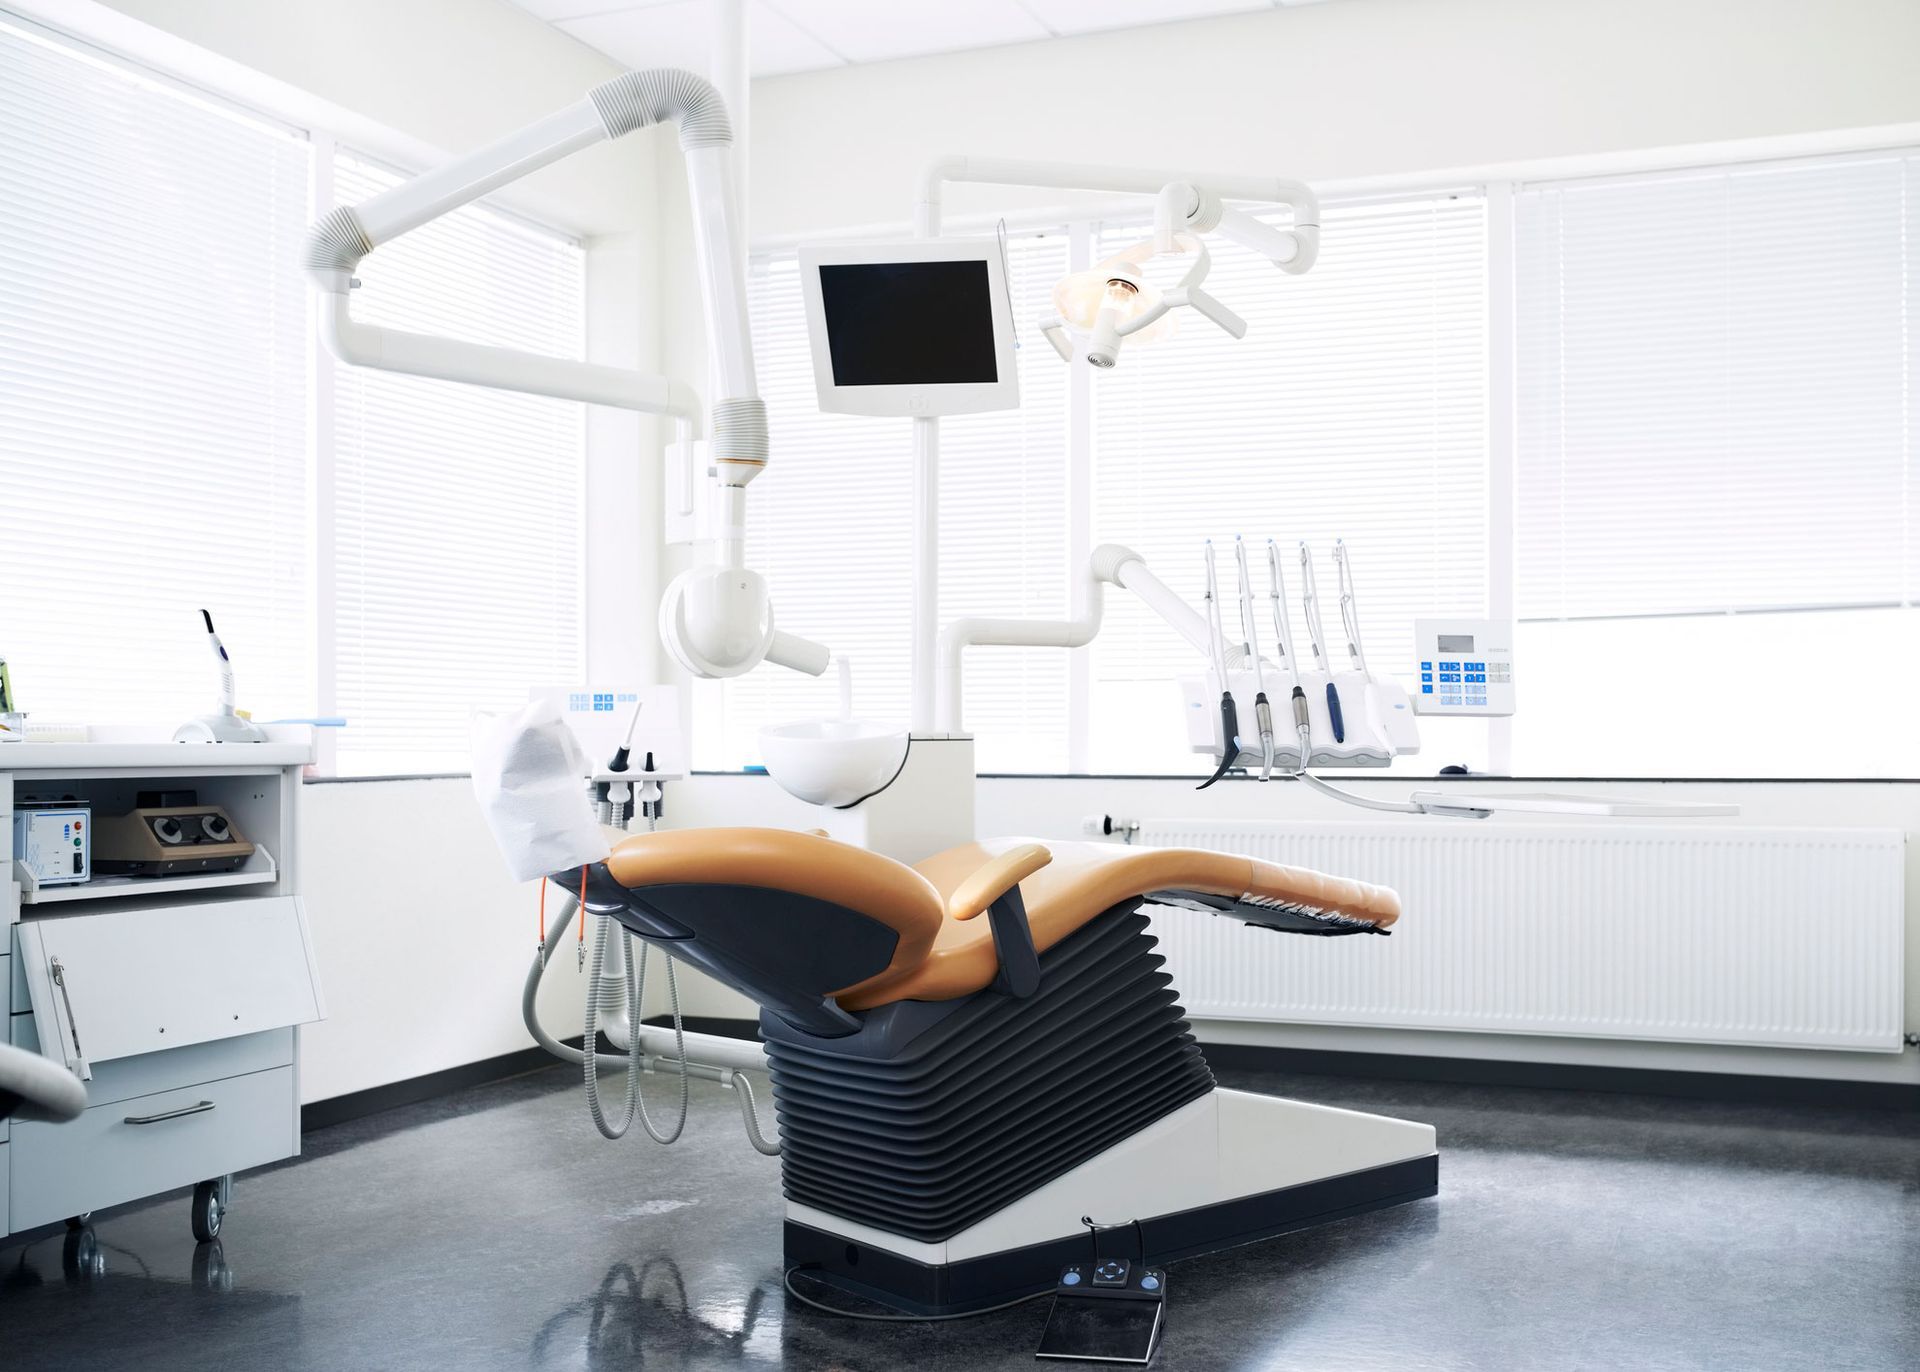 Newly installed dental chair | Miranda, NSW | I Need Dental Sales and Service